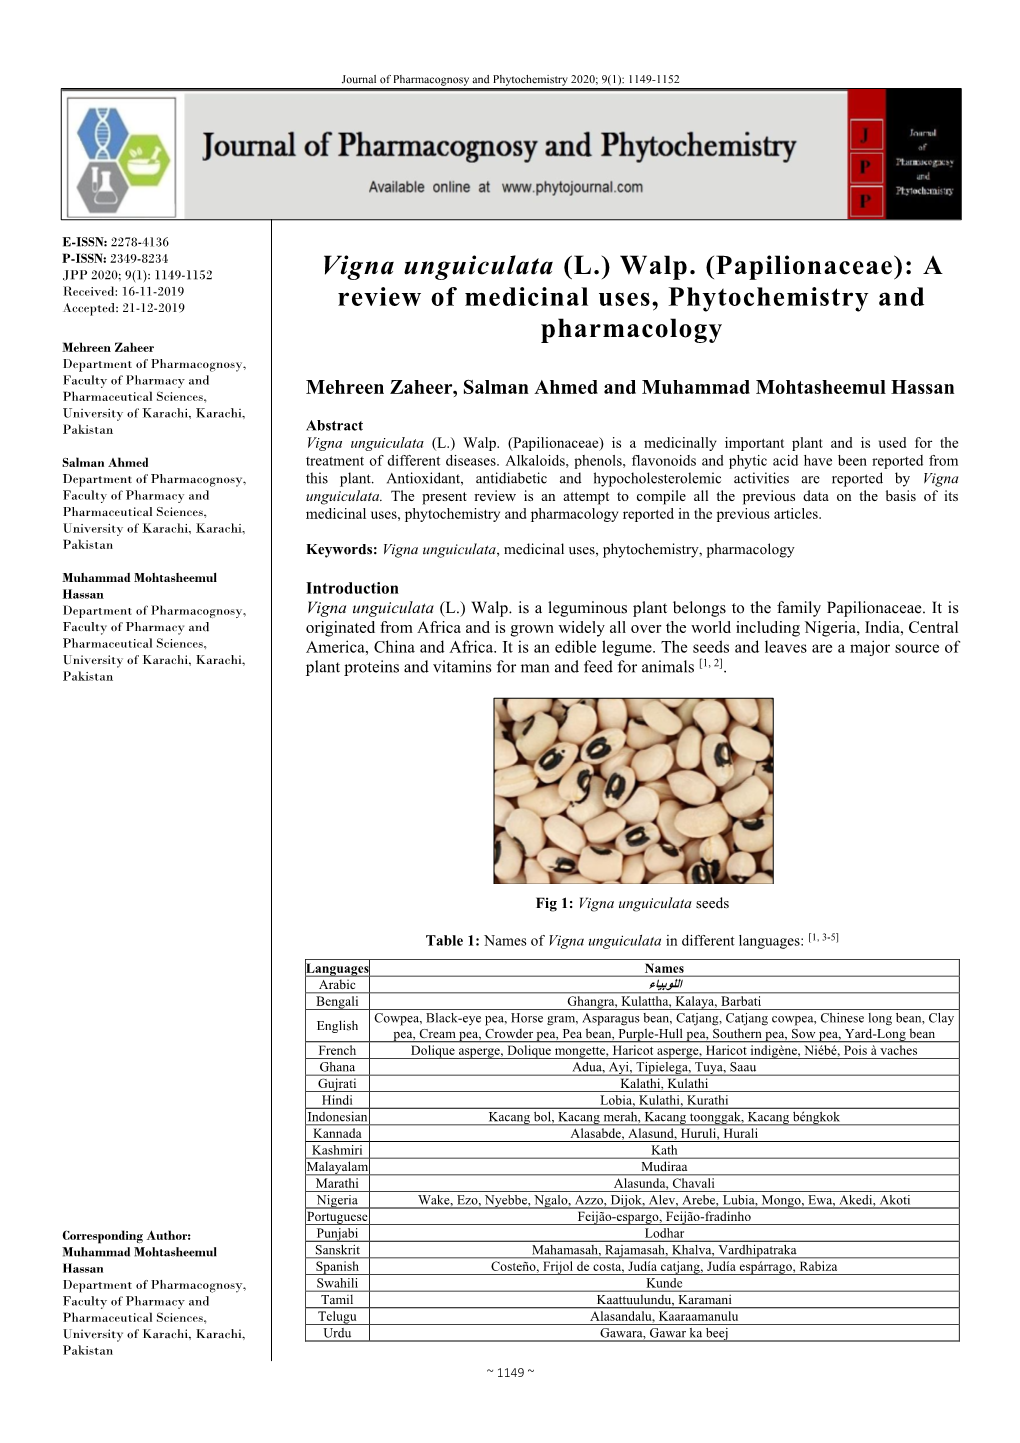 Vigna Unguiculata (L.) Walp